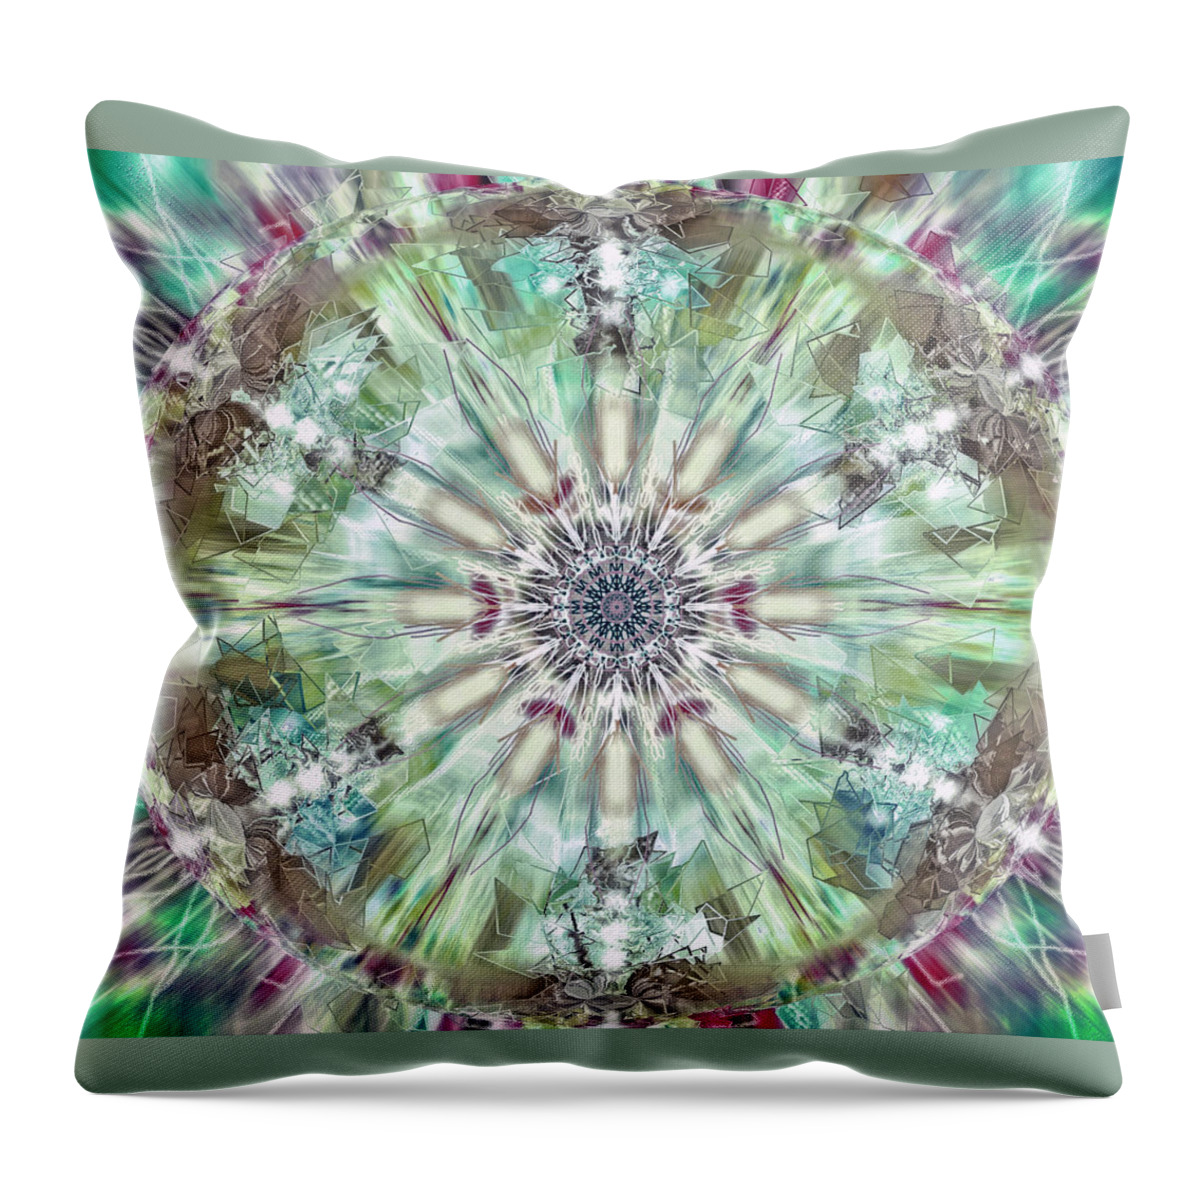 Kaleidoscope Throw Pillow featuring the digital art Kaleidoscope by Savannah Gibbs